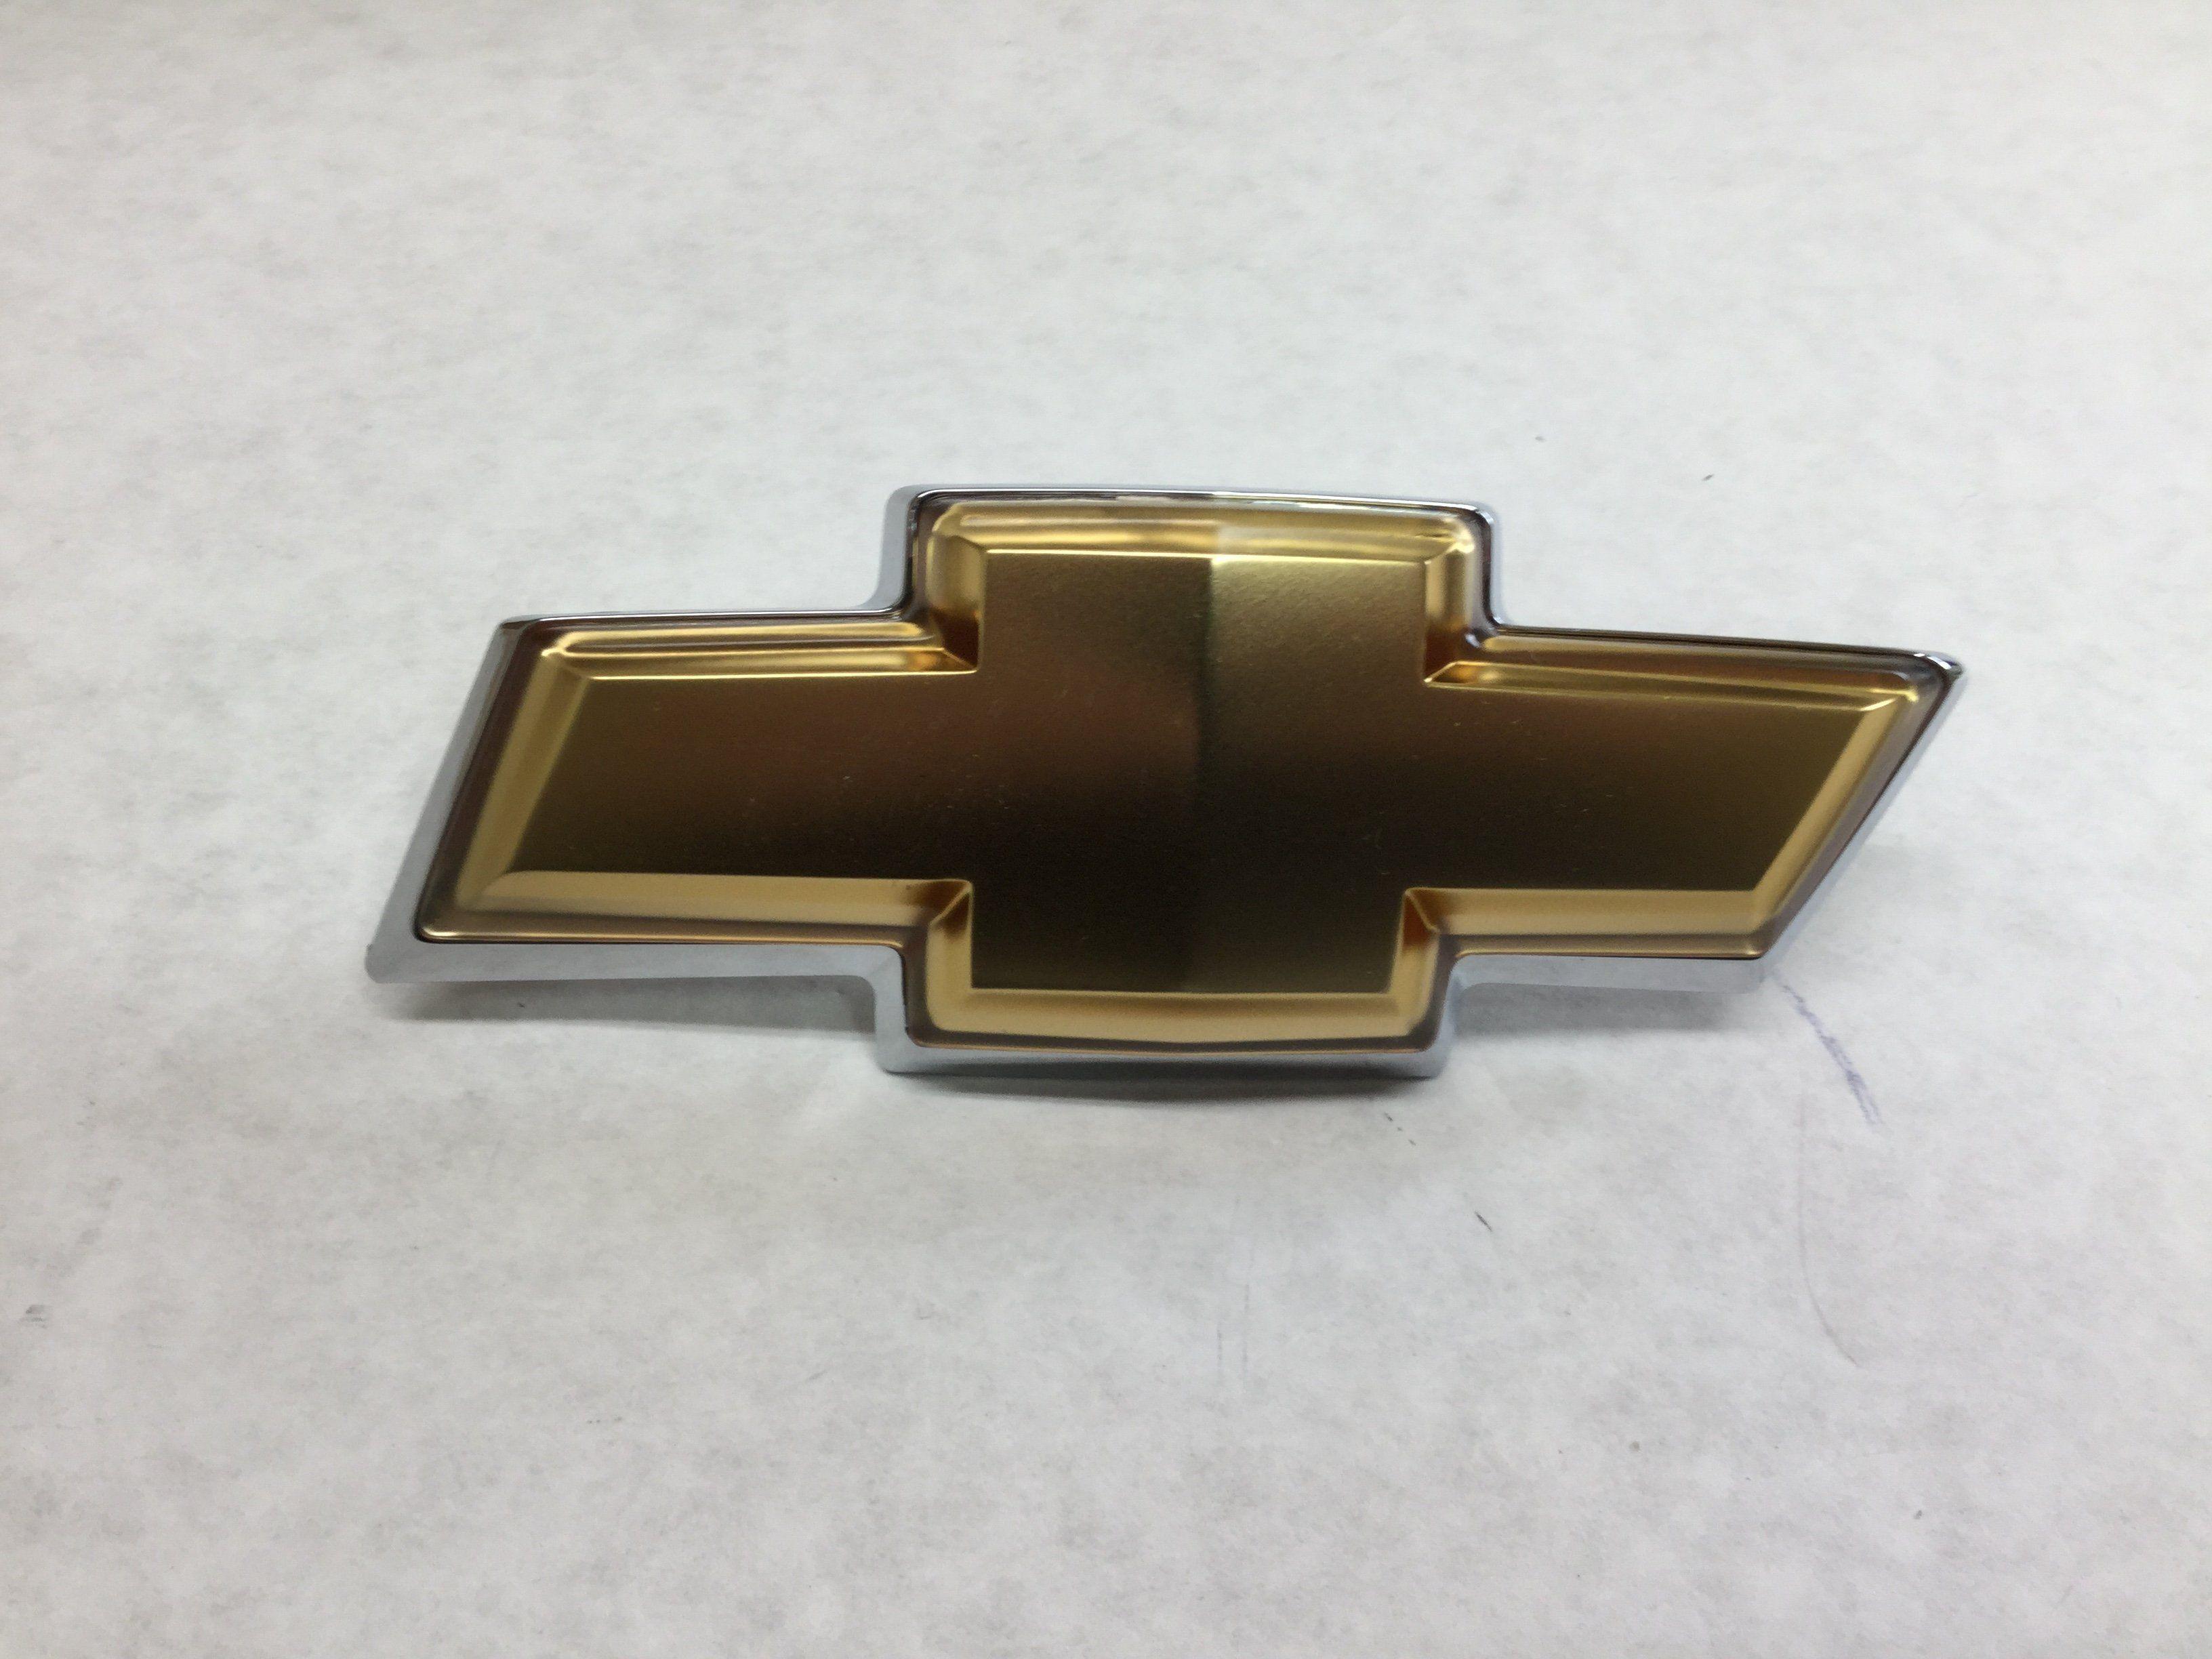 Chevy Cobalt Logo - New 2005-2010 Chevy Cobalt Grill Bowtie Emblem Gold Genuine OEM New ...